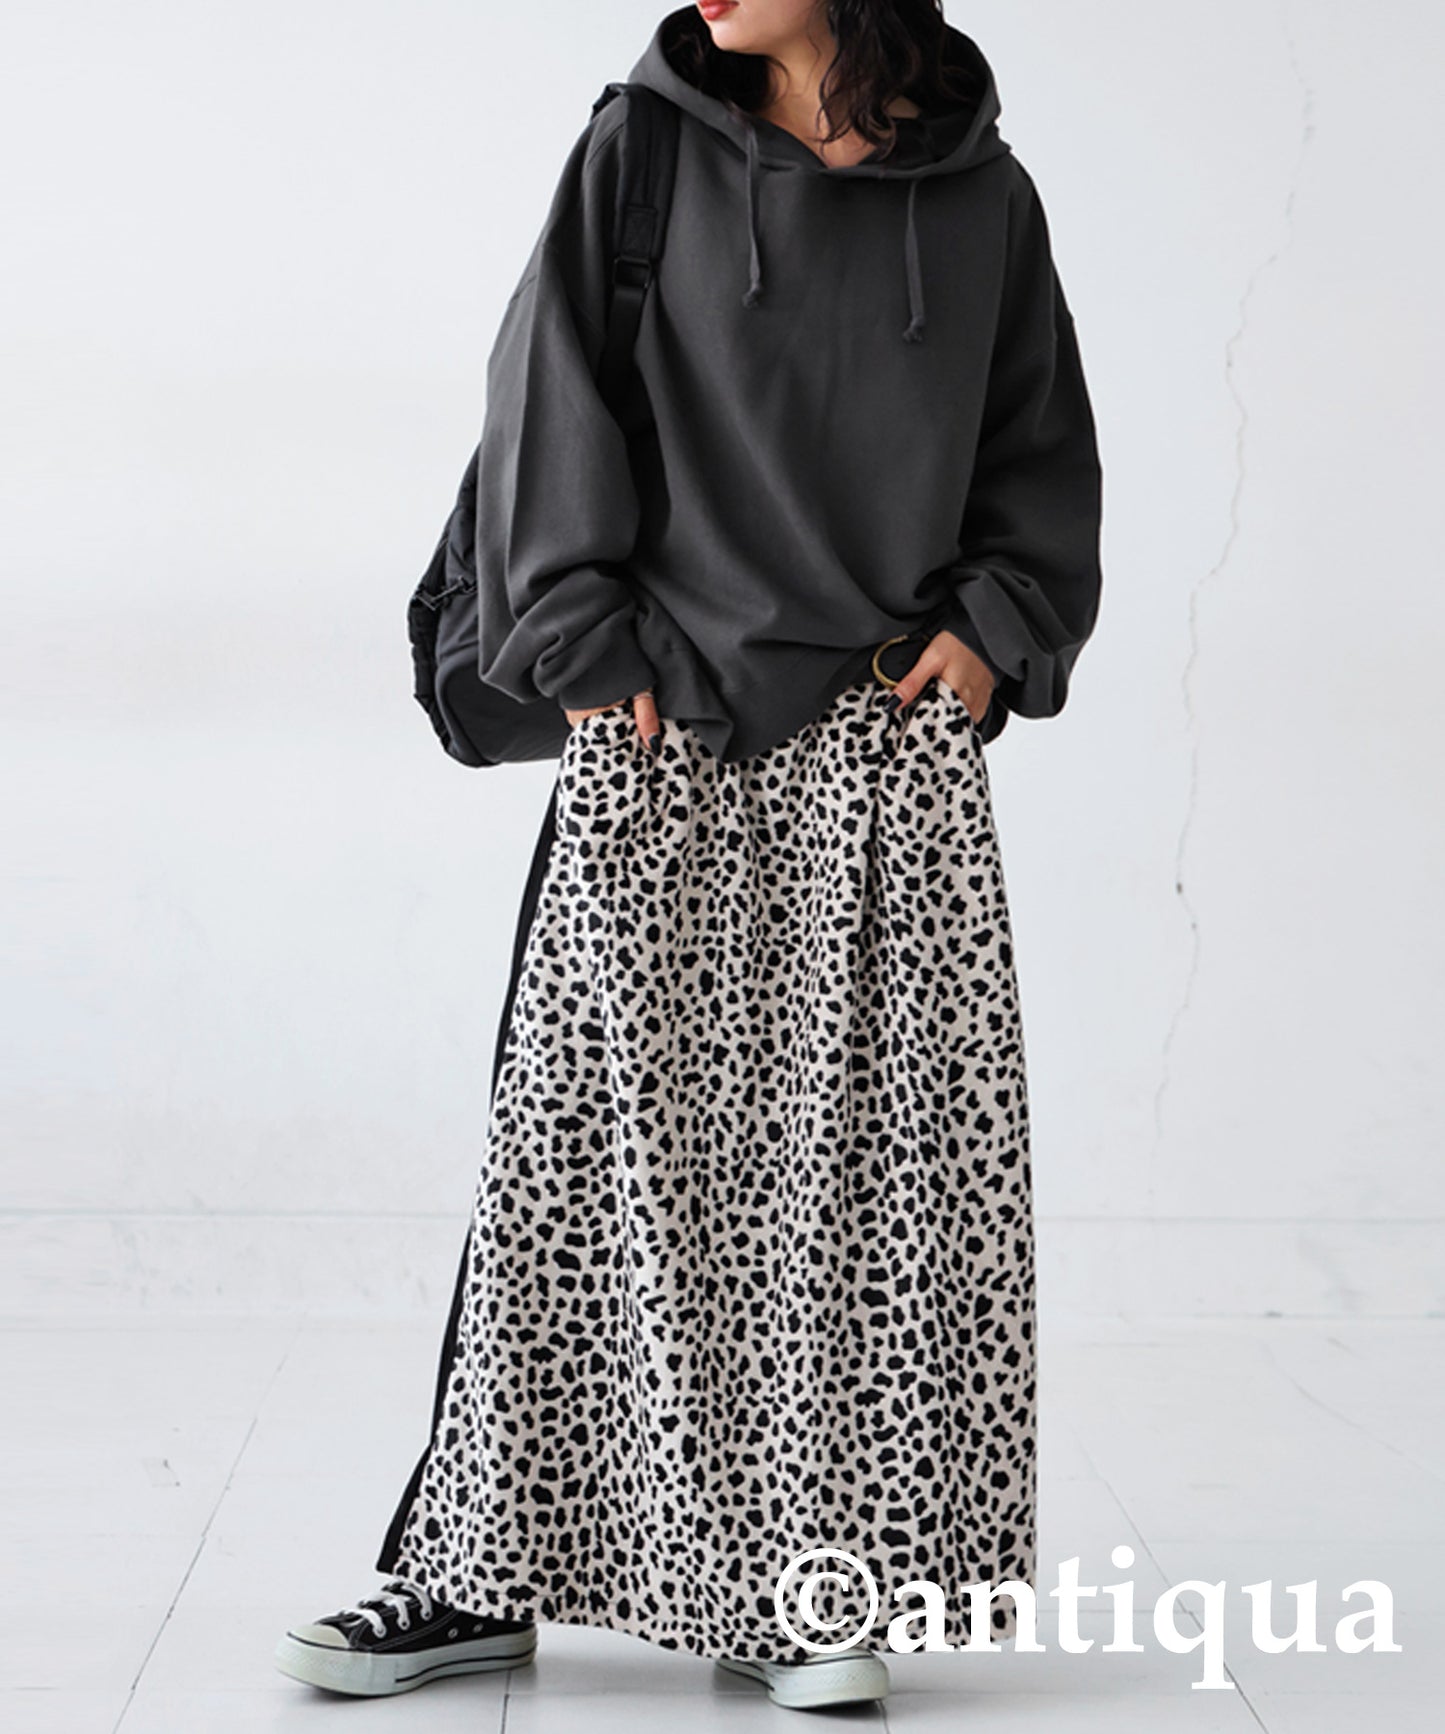 Leopard Skirt Ladies